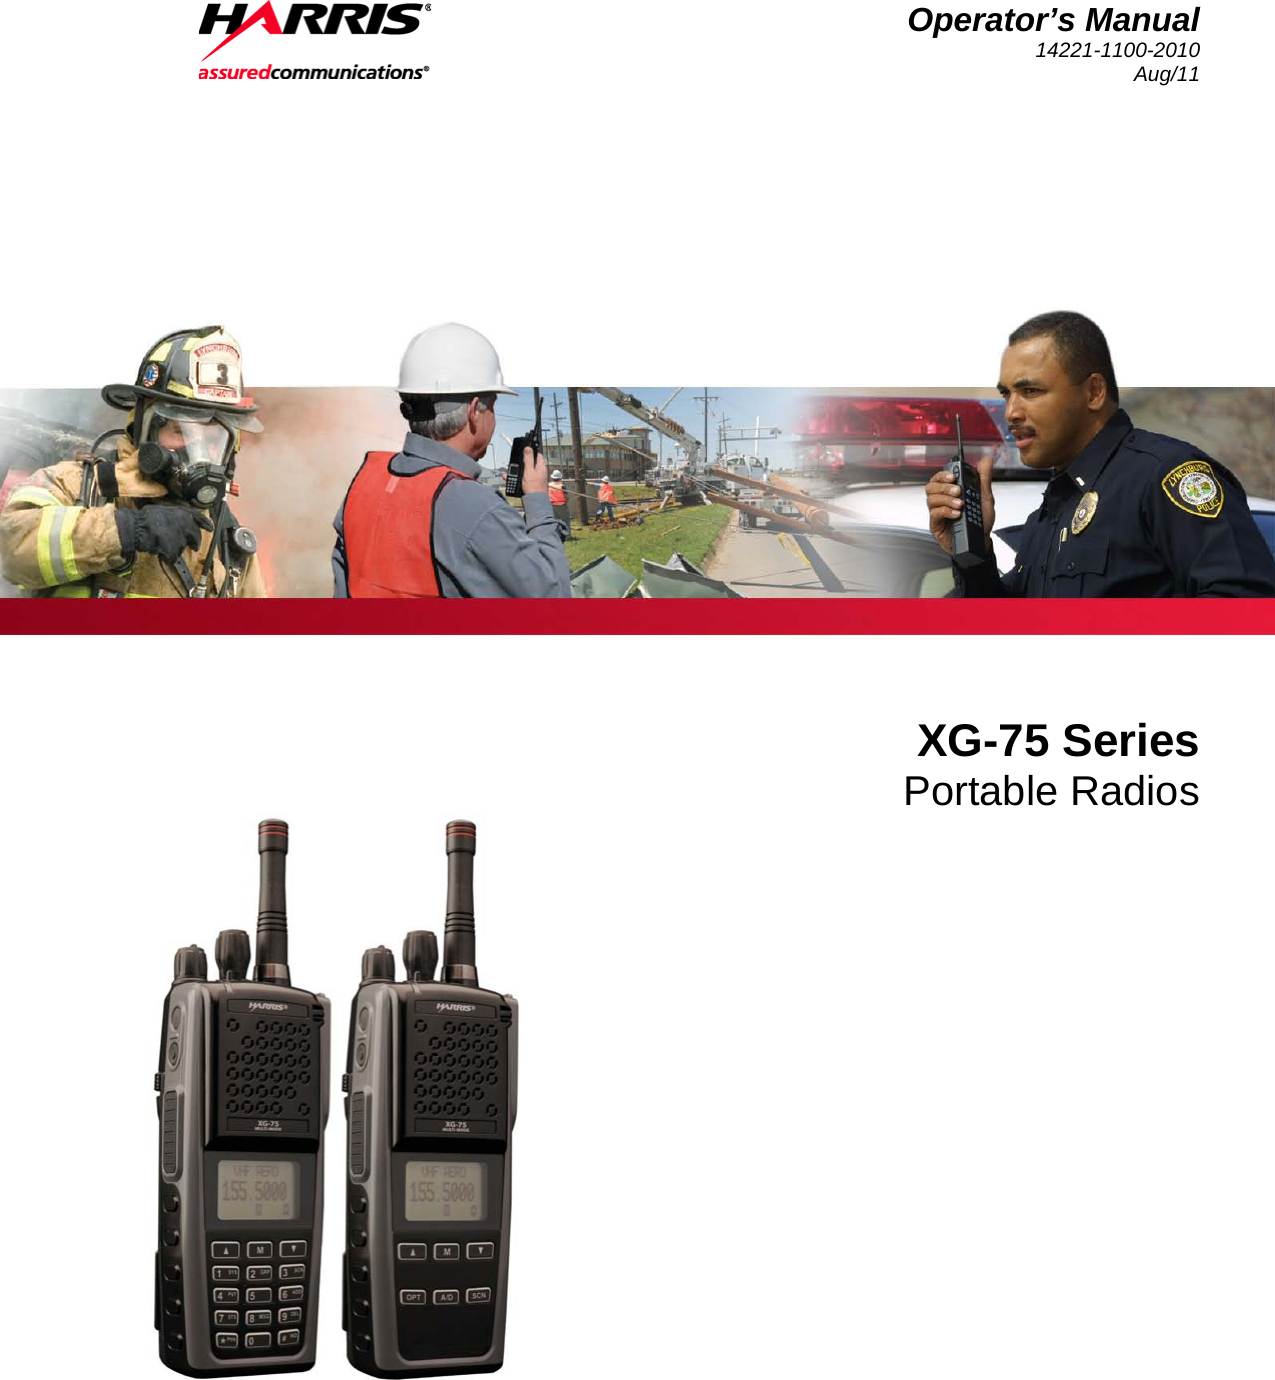  Operator’s Manual 14221-1100-2010 Aug/11    XG-75 Series Portable Radios   